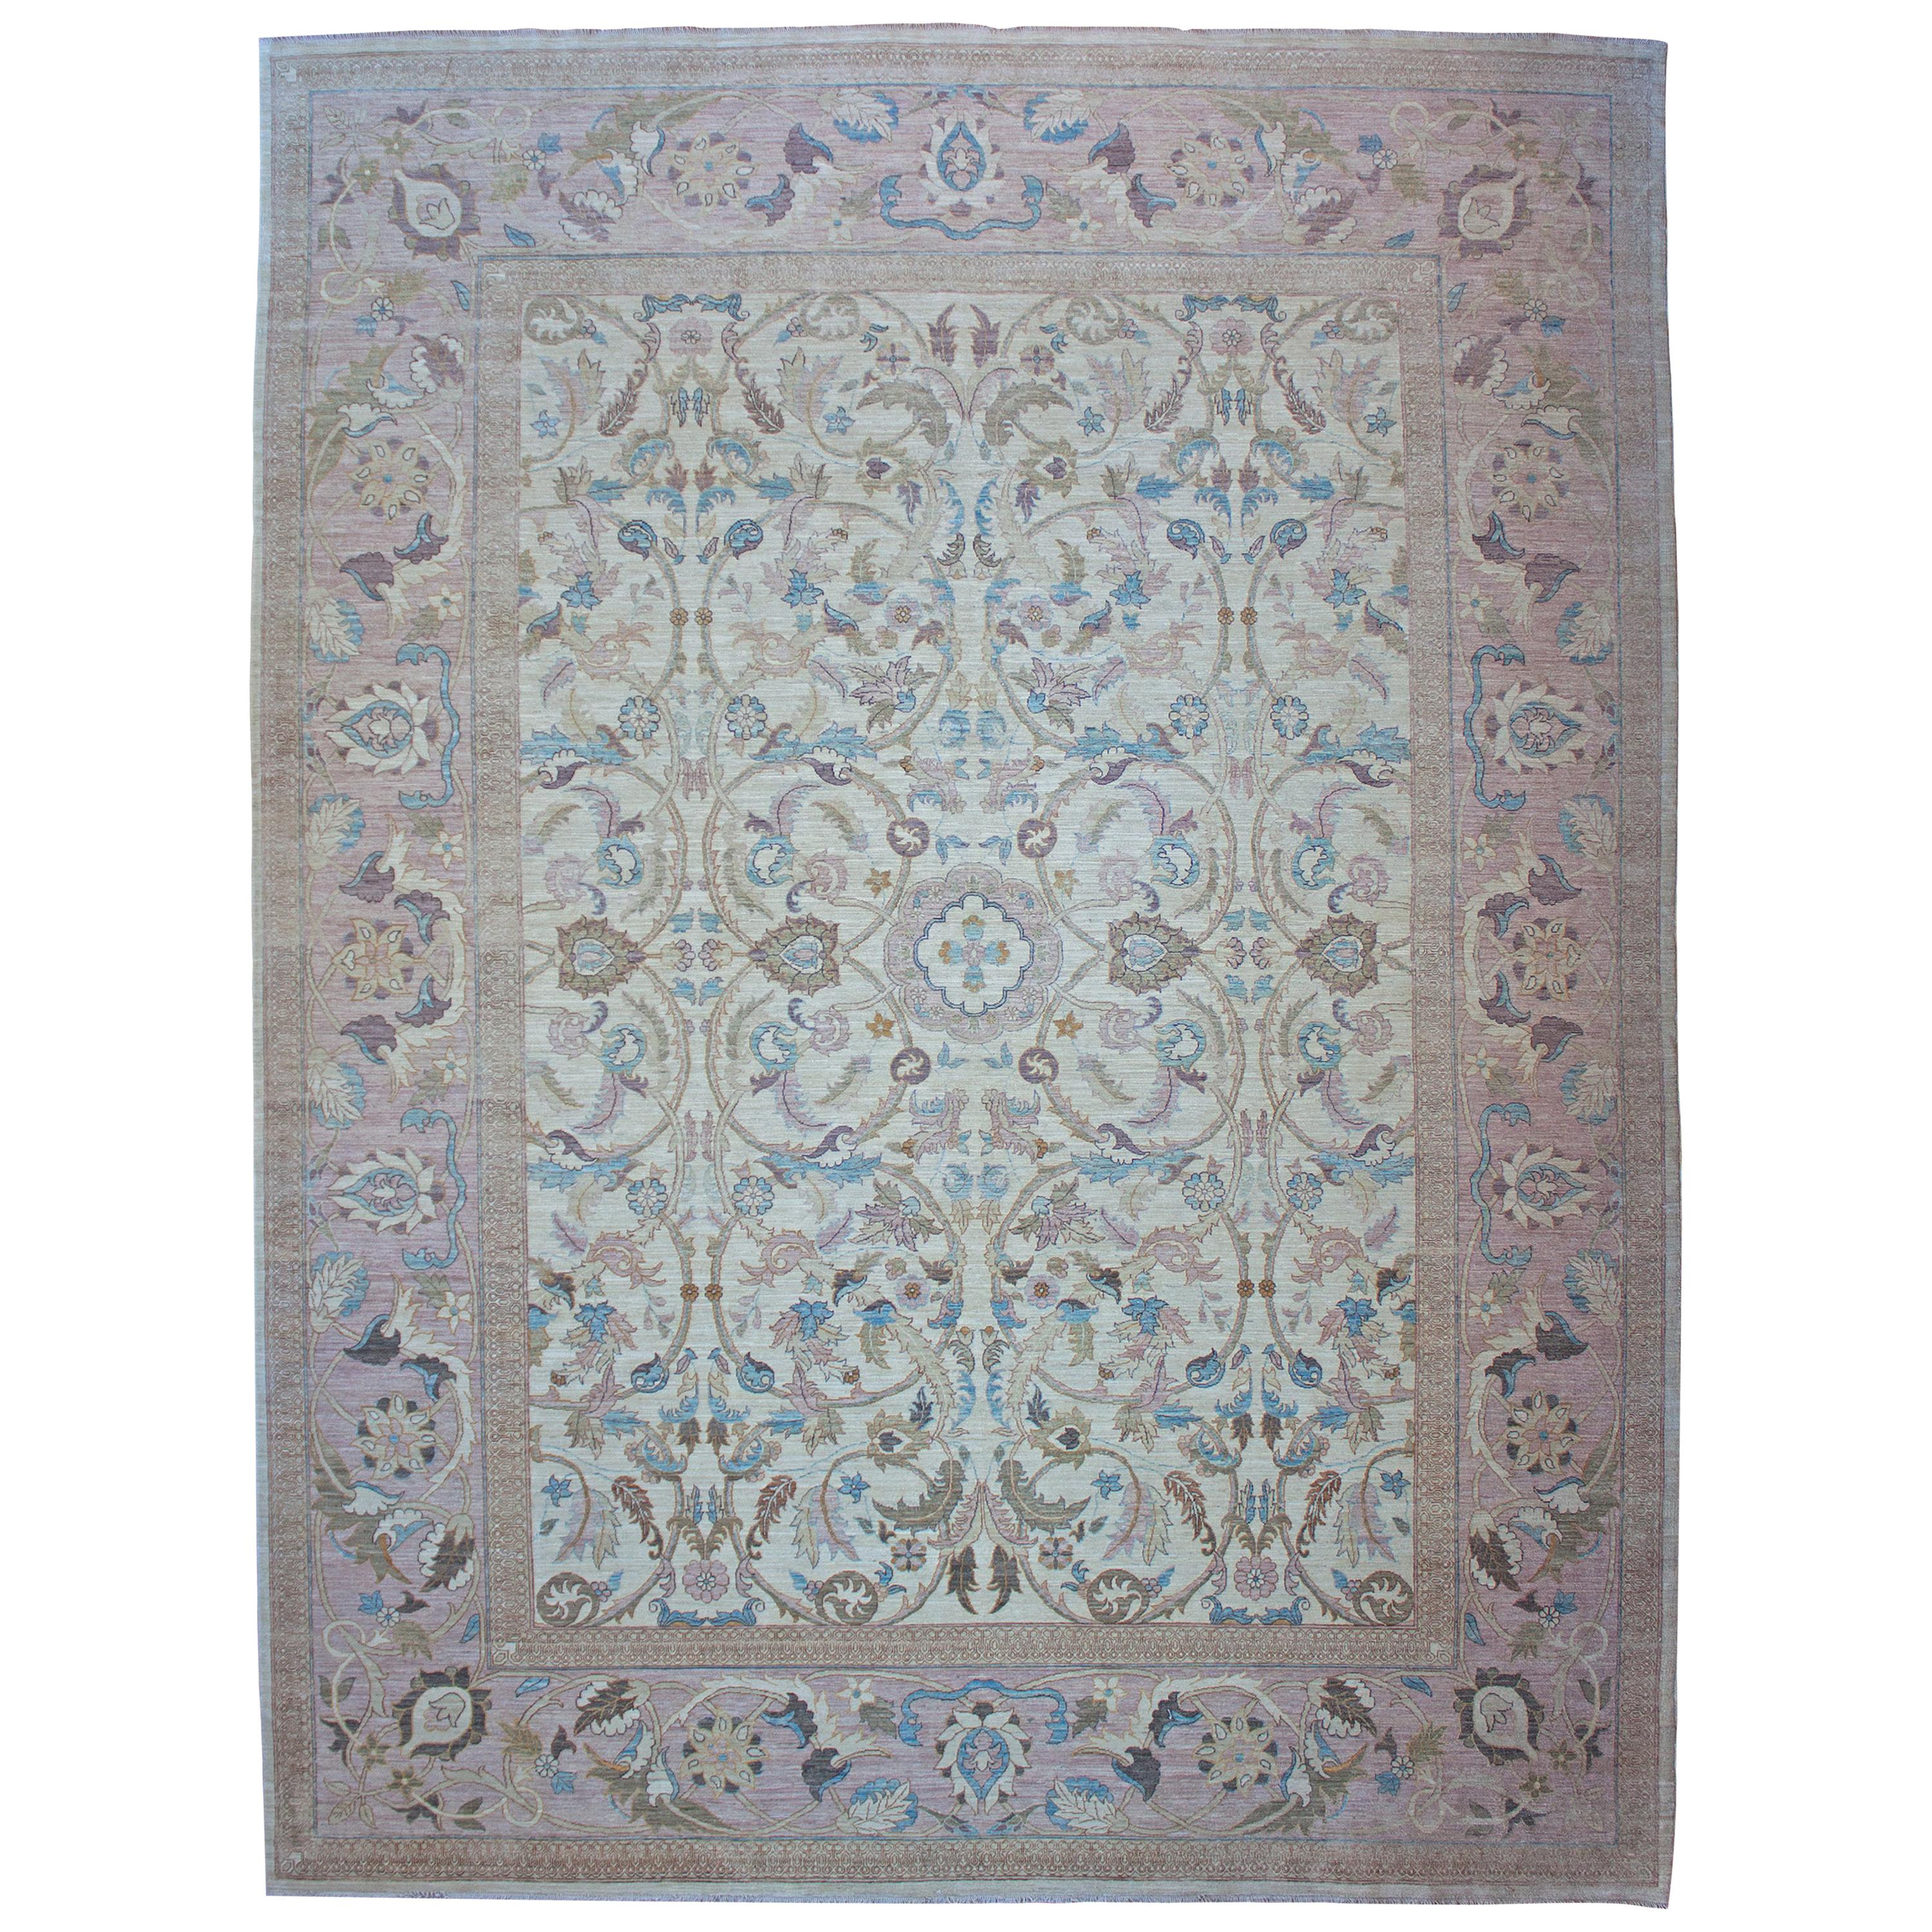 Classical 'Sickle Leaf' Design, Contemporary Carpet For Sale